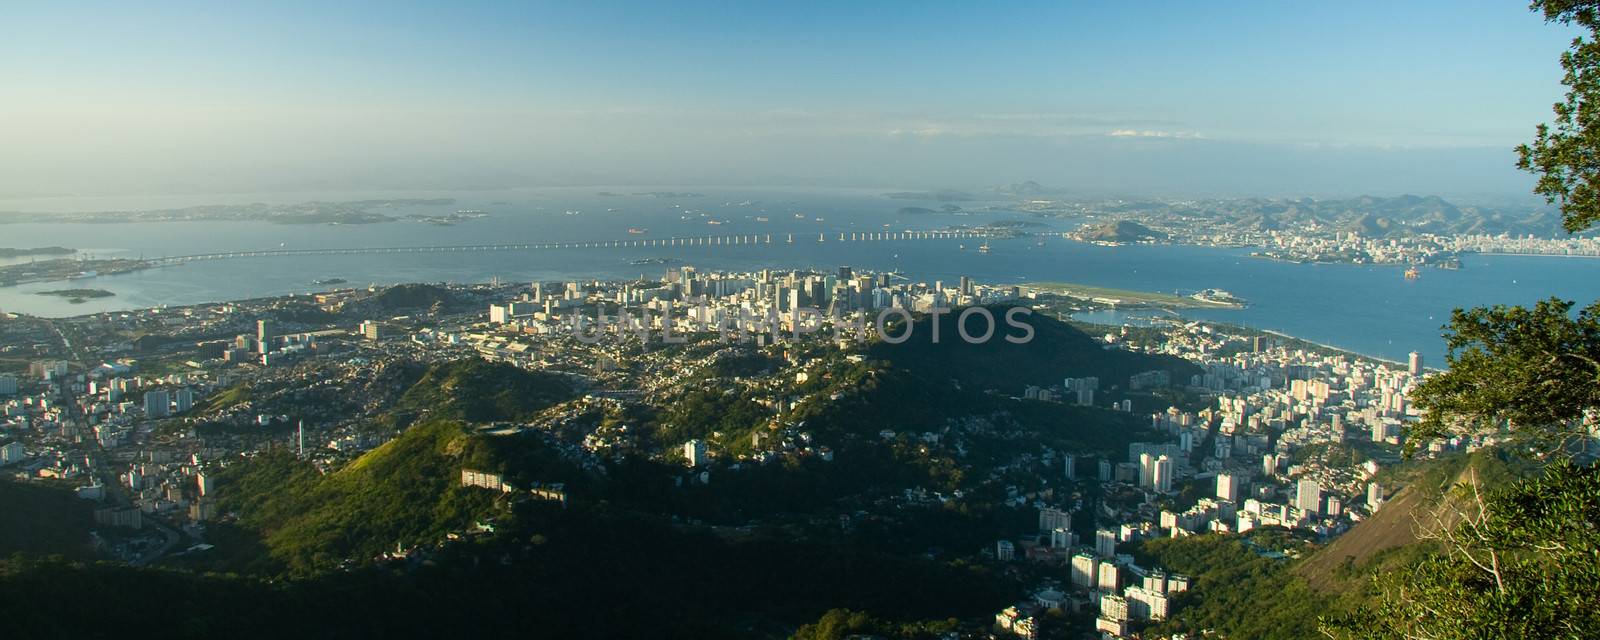 High angle view of a city, Rio De Janeiro, Brazil